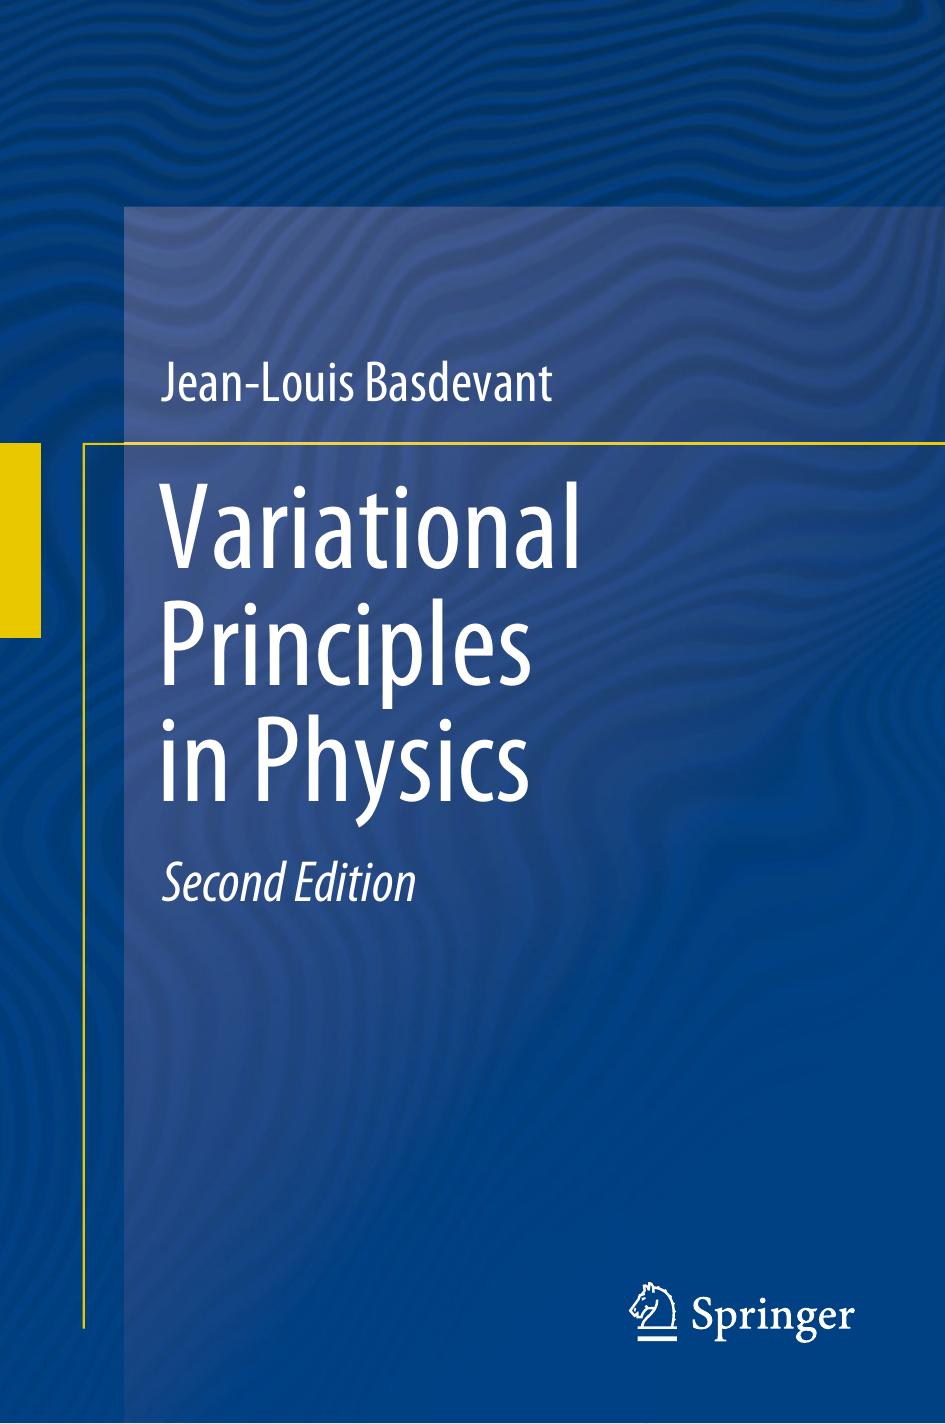 Variational Principles in Physics by Jean-Louis Basdevant